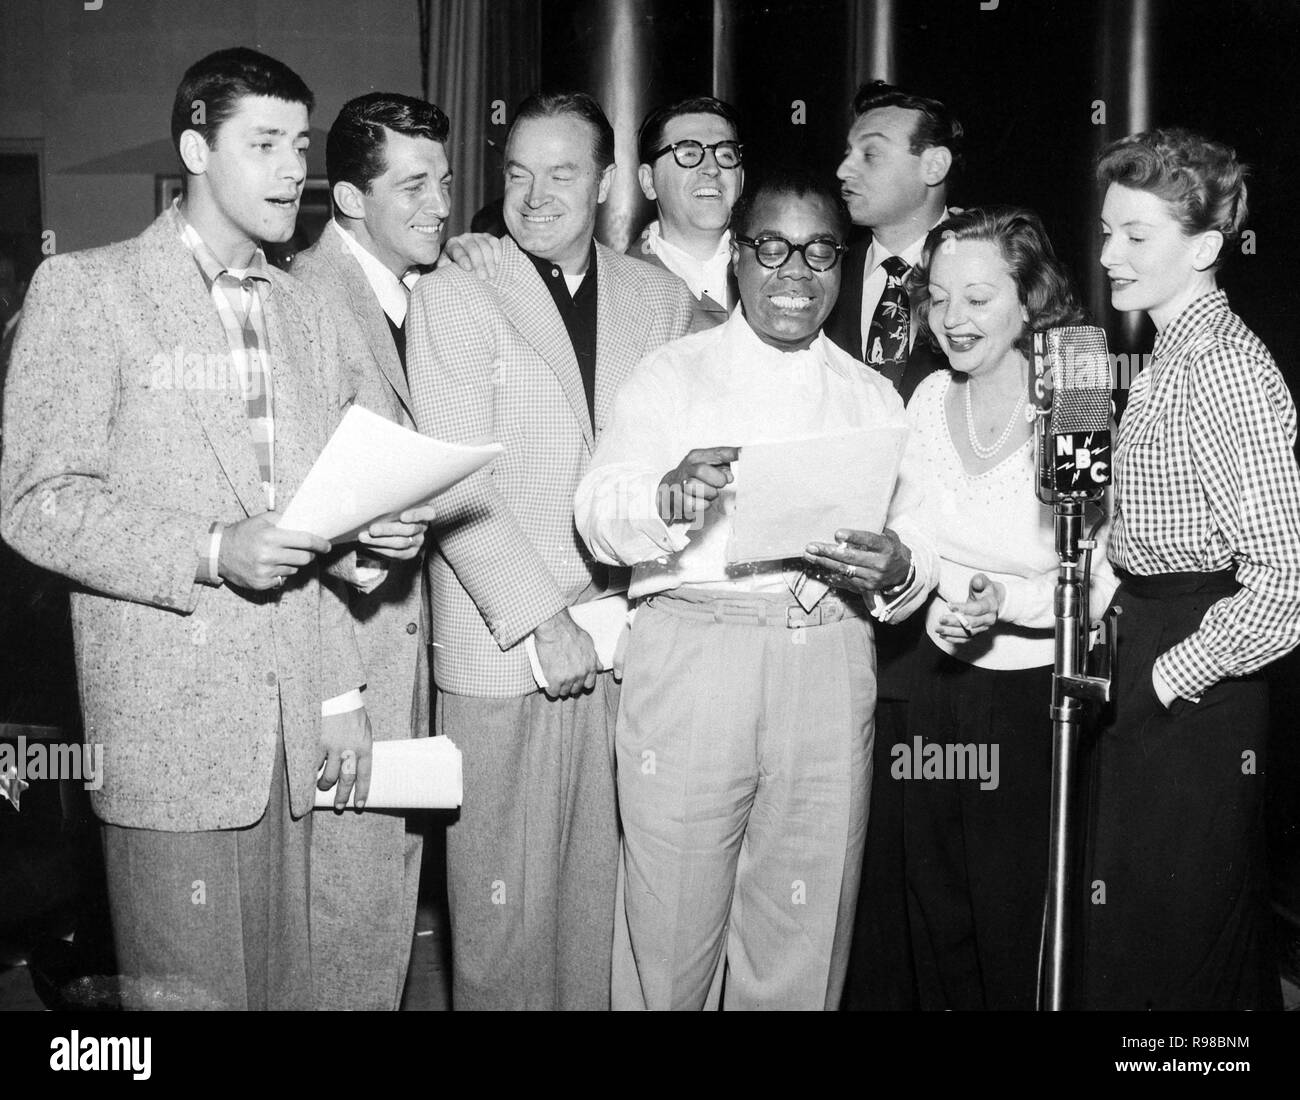 LOUIS ARMSTRONG; JERRY LEWIS; BOB HOPE; DEBORAH KERR; TALLULAH BANKHEAD; DEAN MARTIN; MEREDITH WILLSON; FRANKIE LAINE. 1949. Stock Photo